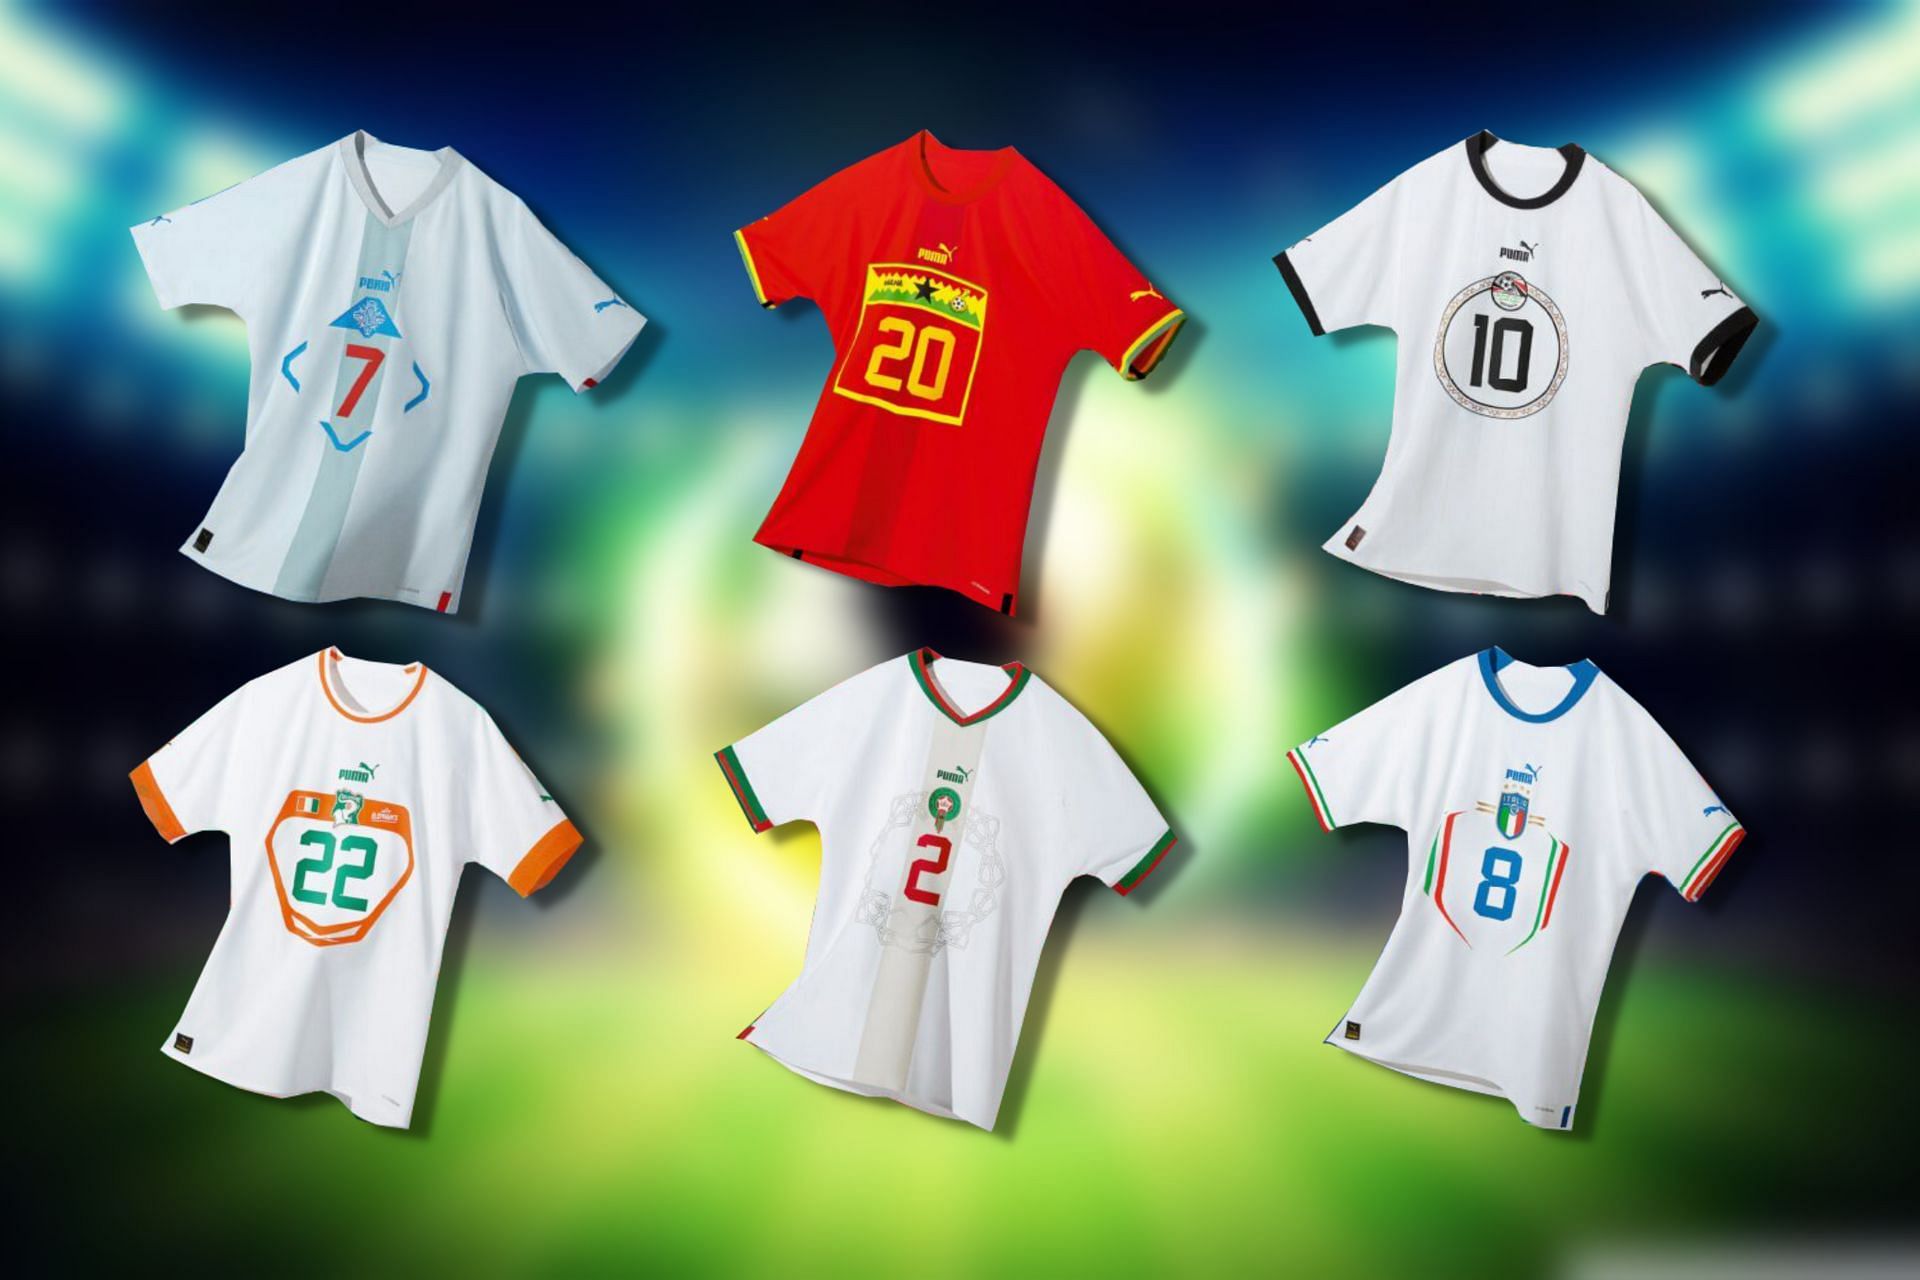 Puma FIFA World Cup jerseys (Image via Sportskeeda)